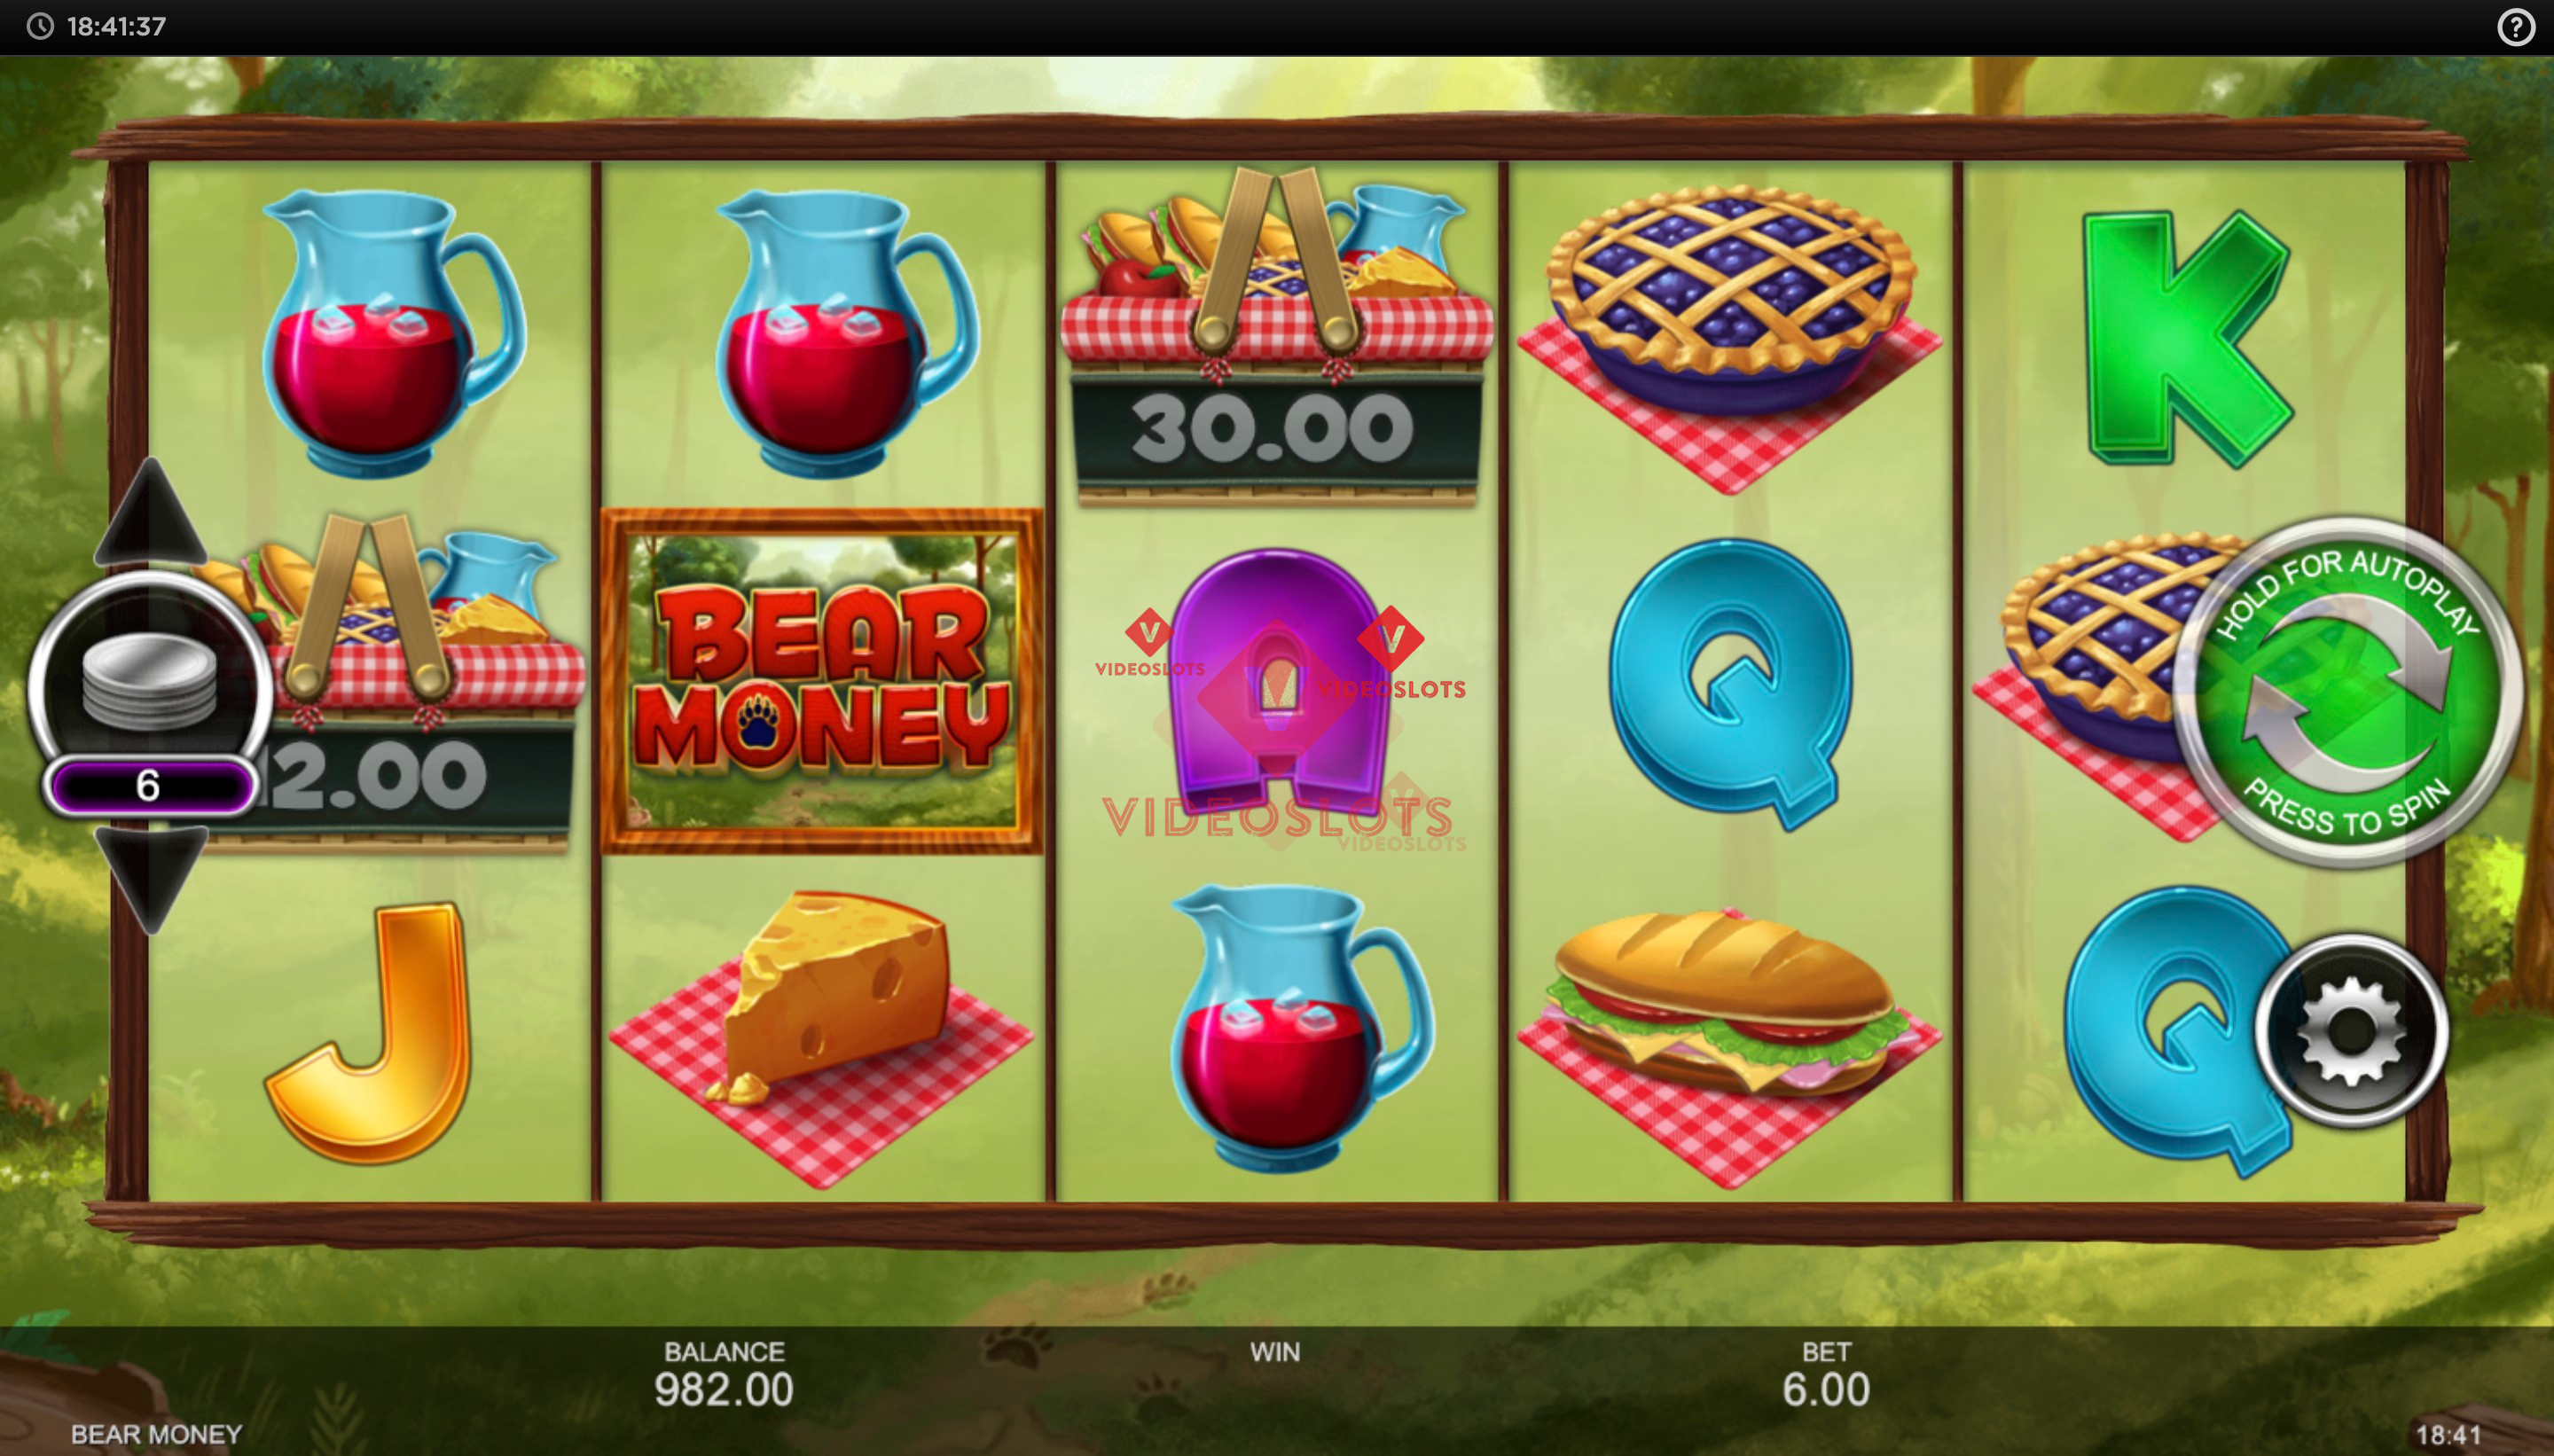 Base Game for Bear Money slot from Inspired Gaming